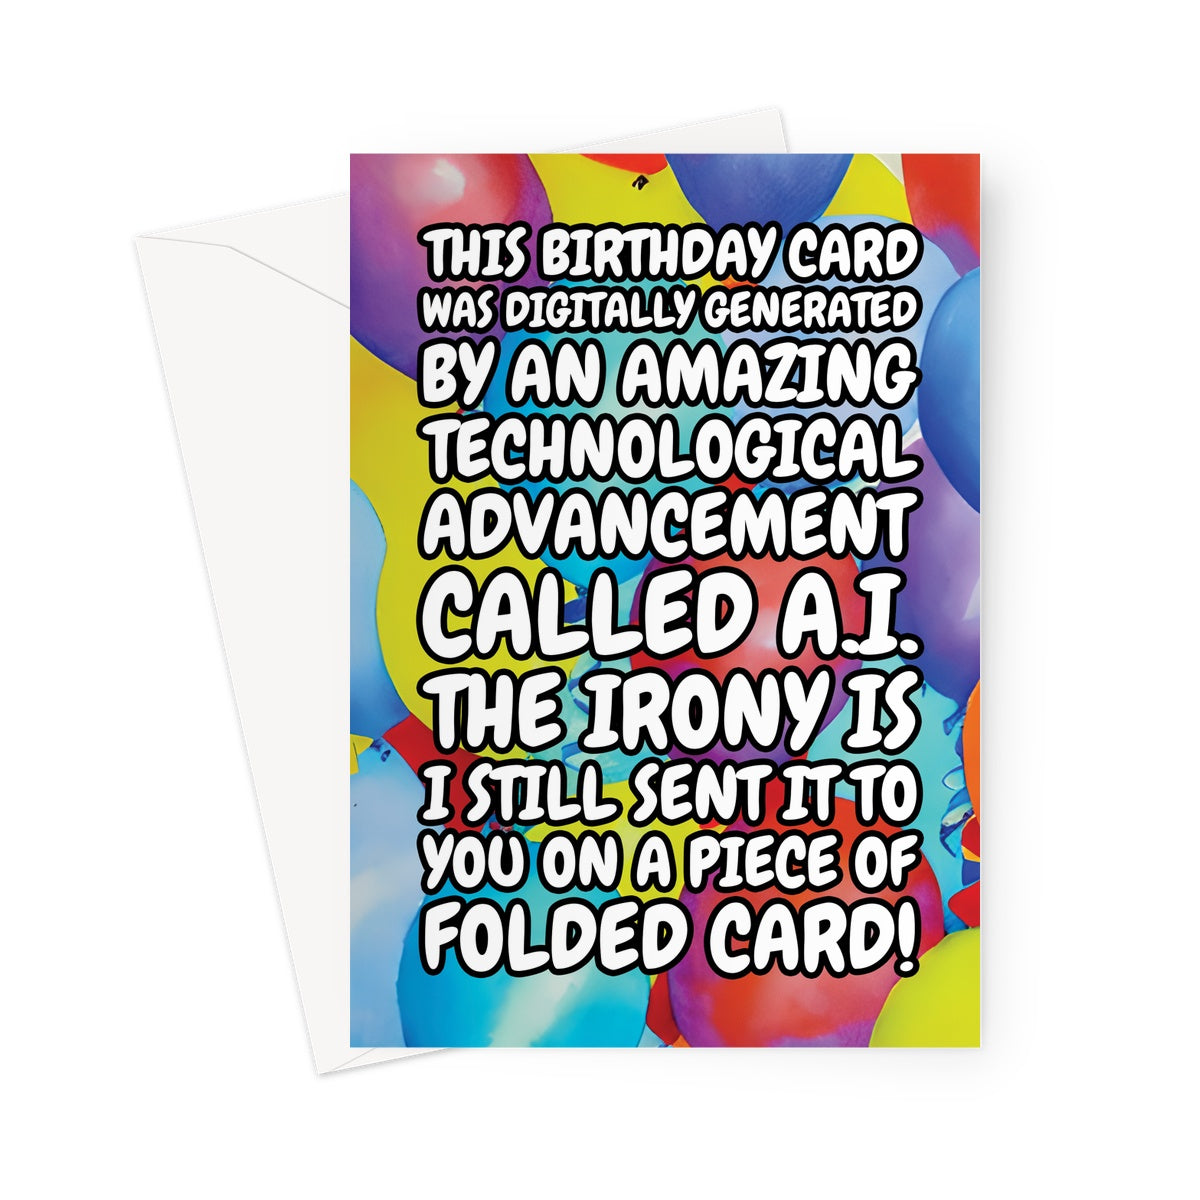 Ironic AI generated birthday card